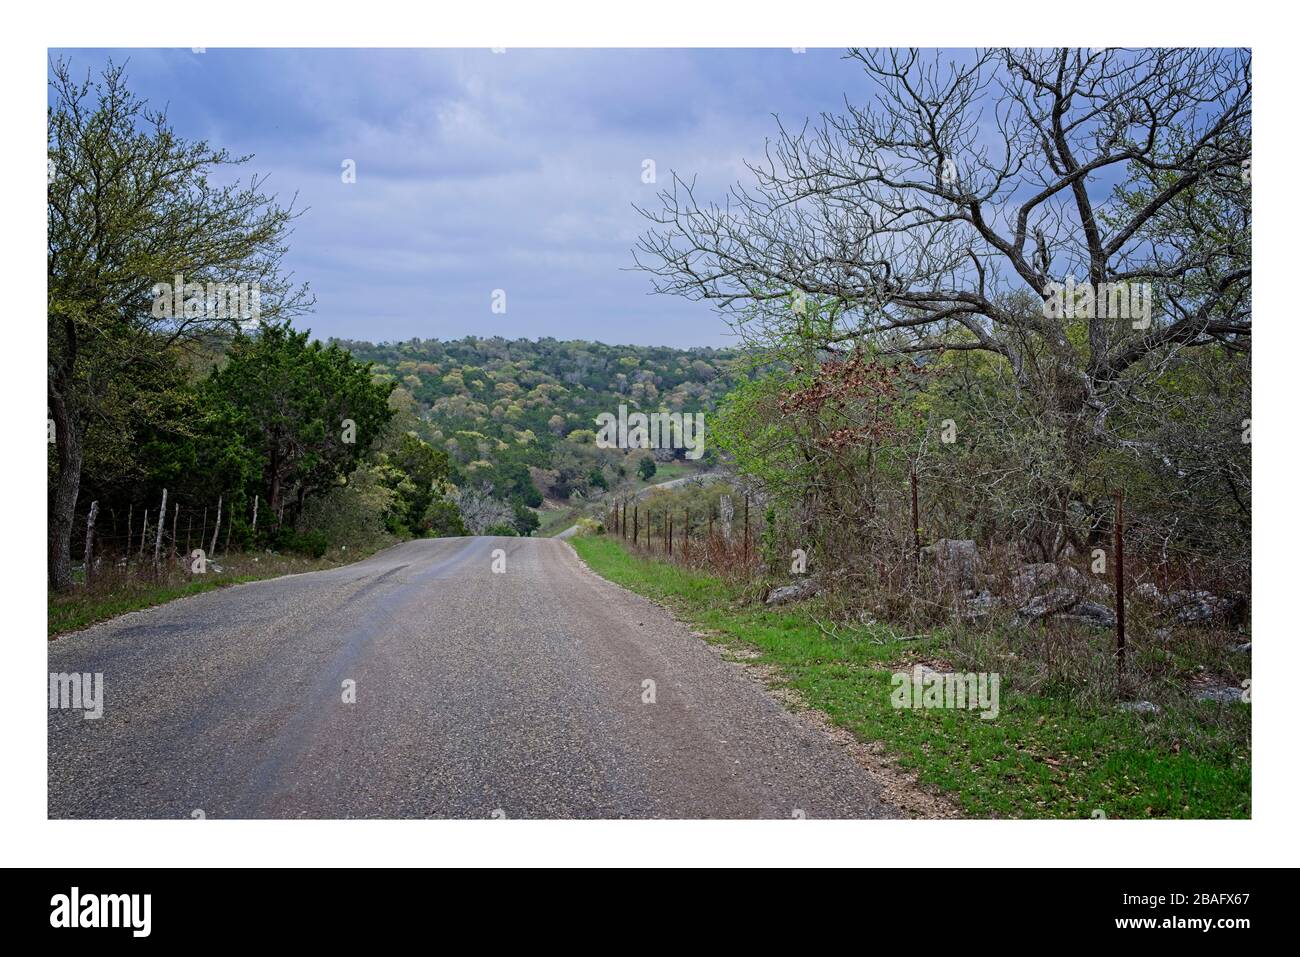 Texas Hill Country strada rurale con colline e un cielo nuvoloso Foto Stock